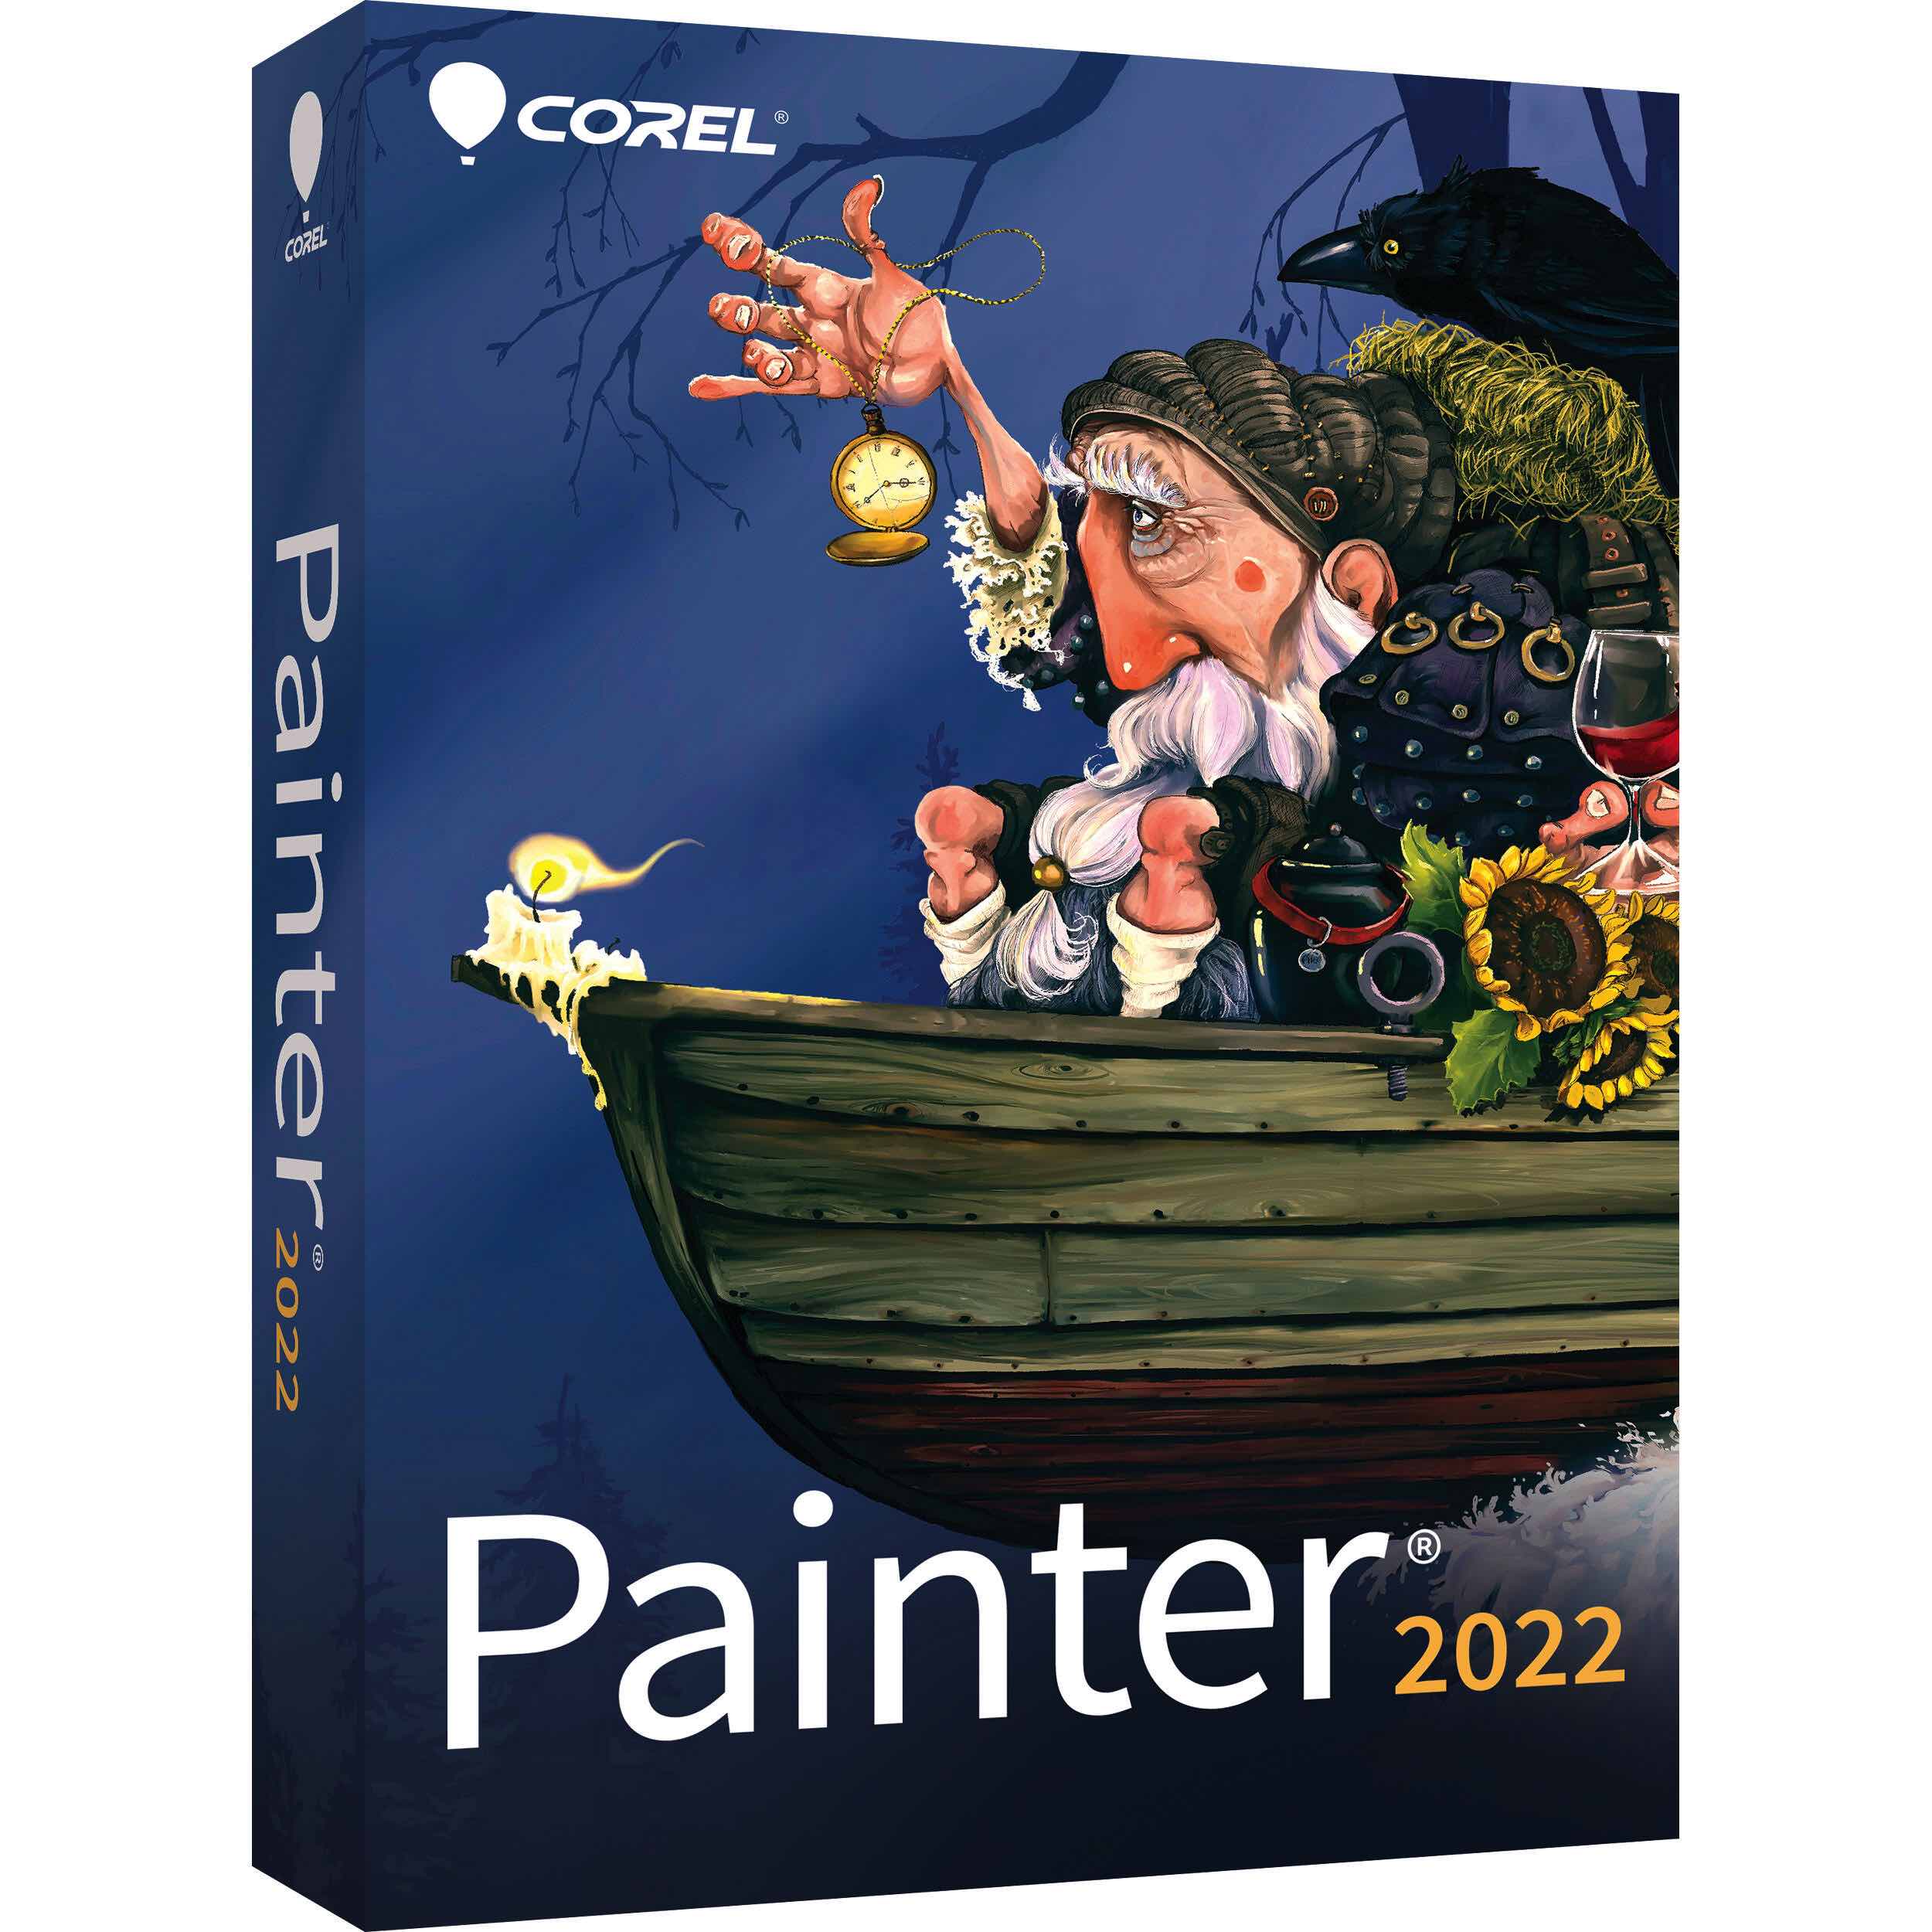 Painter 2022 Professional digital art software for Mac